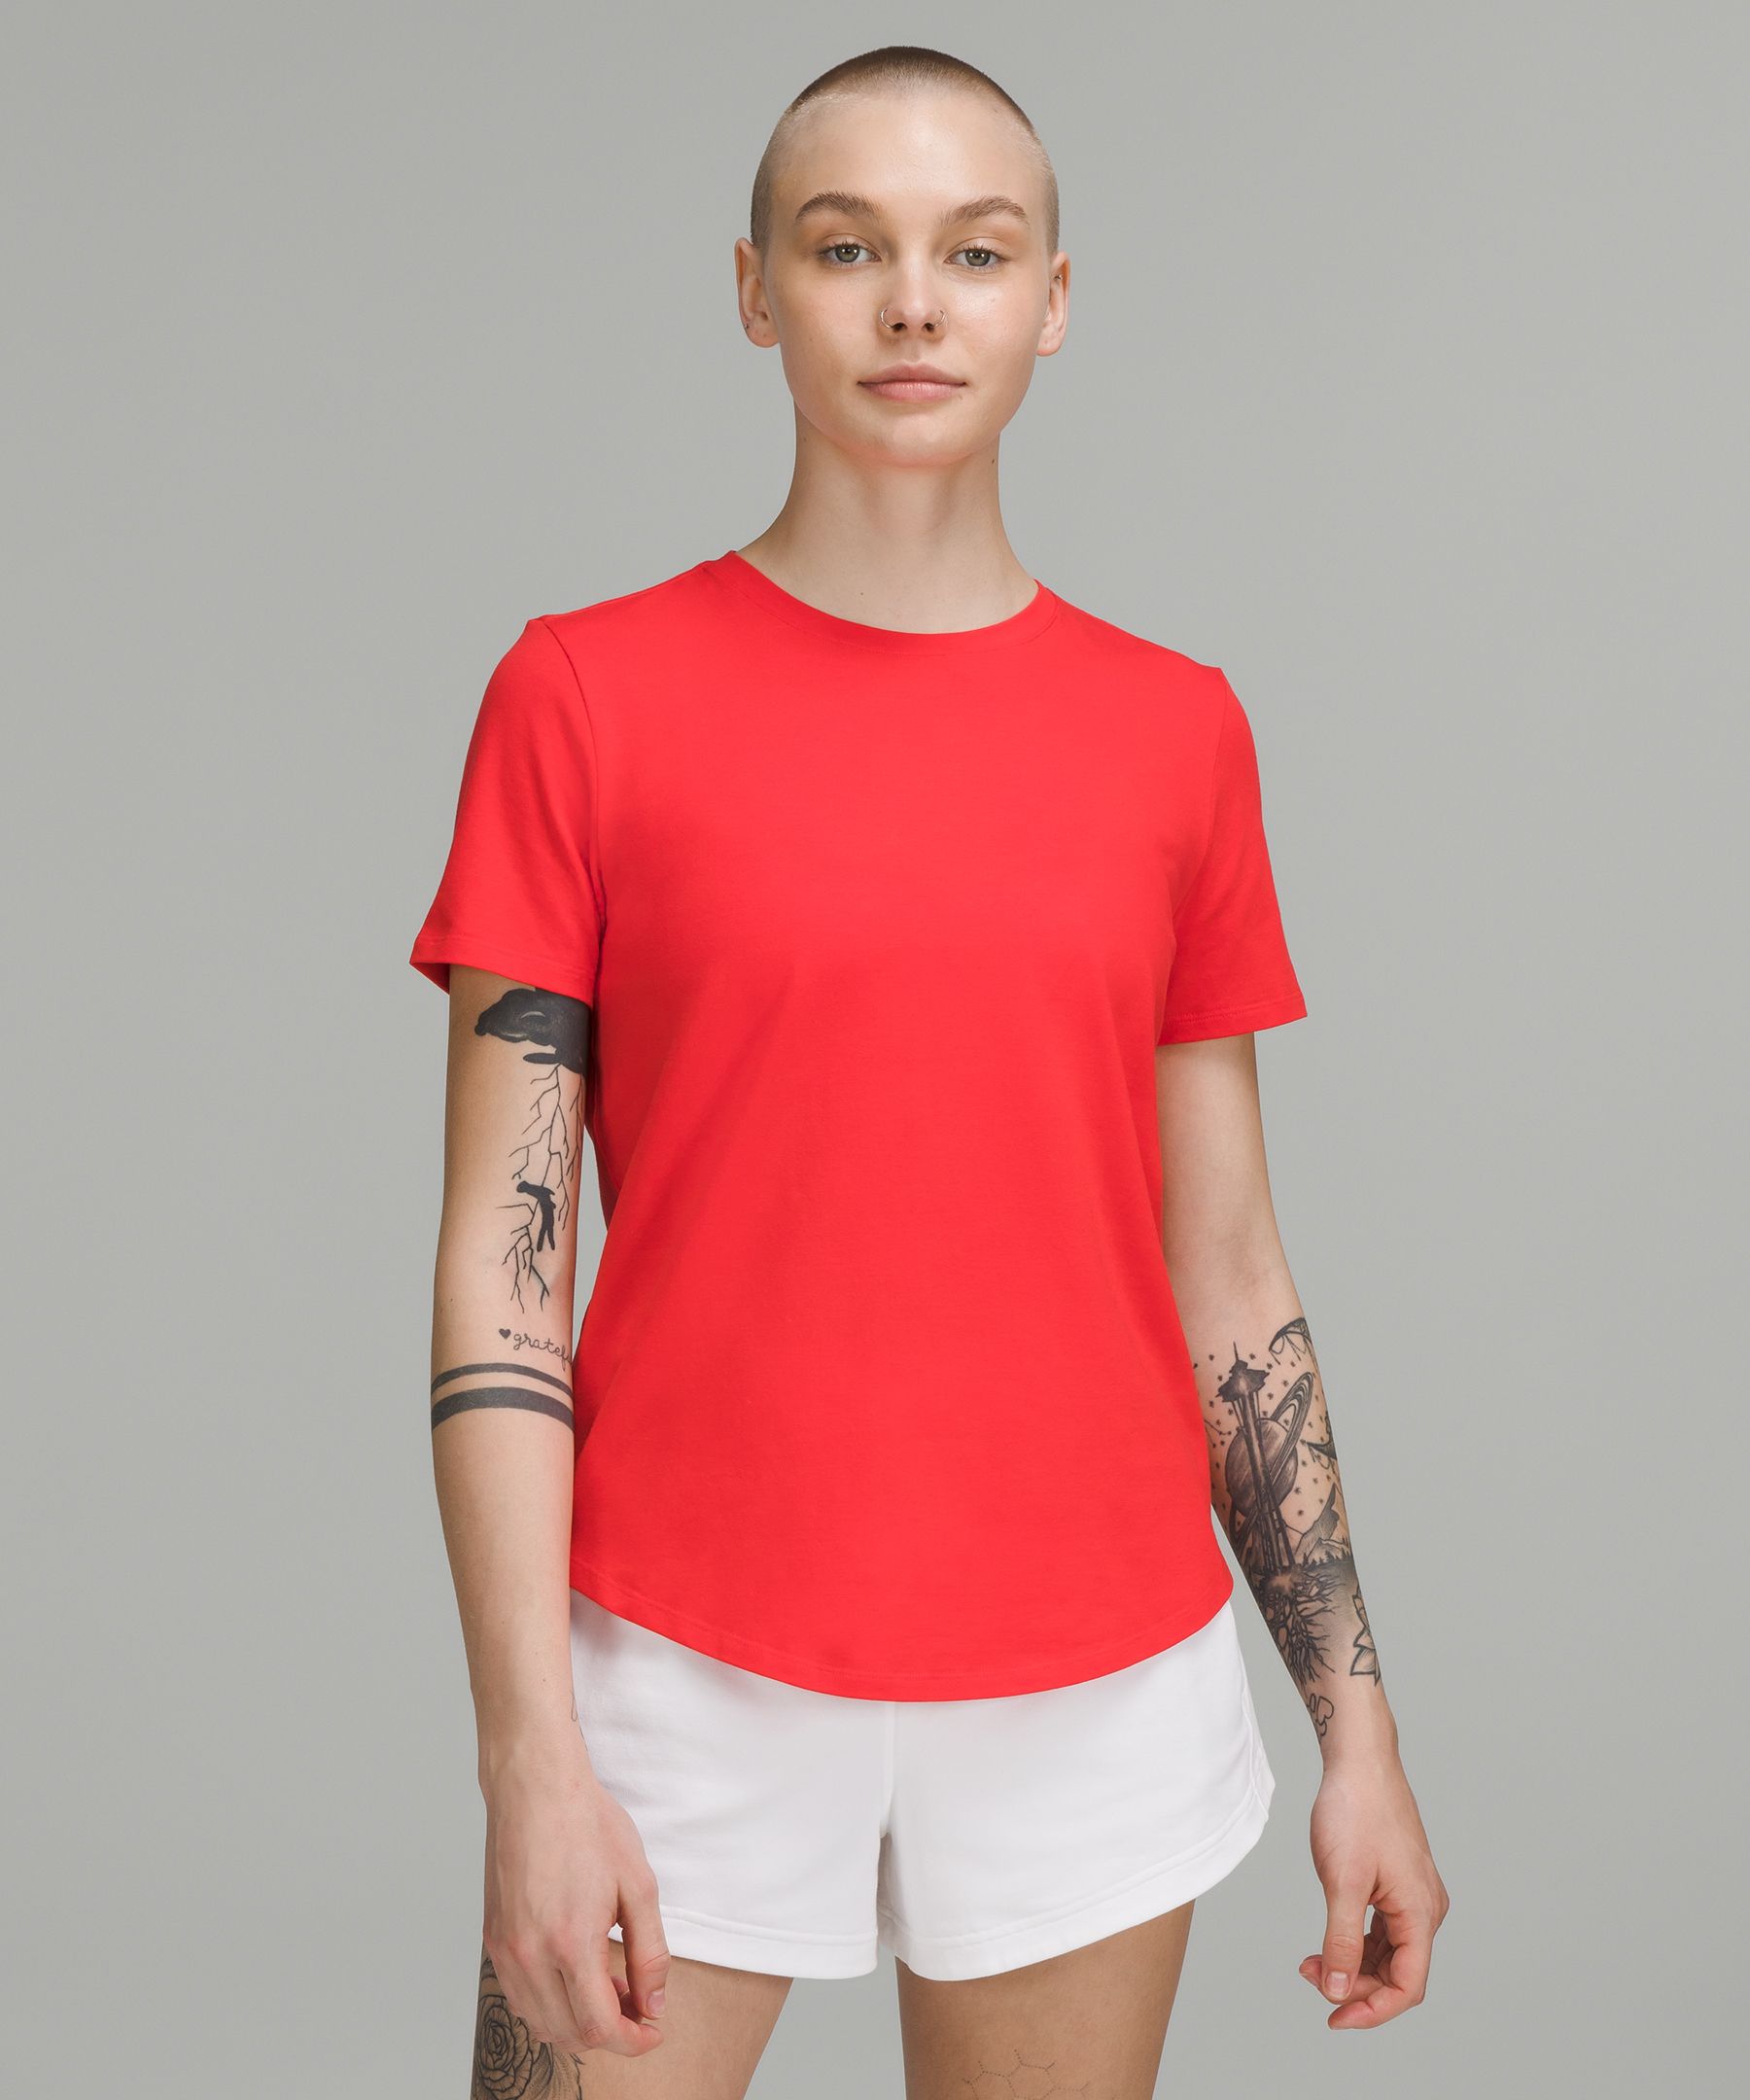 Lululemon Love Crew T-shirt In Love Red